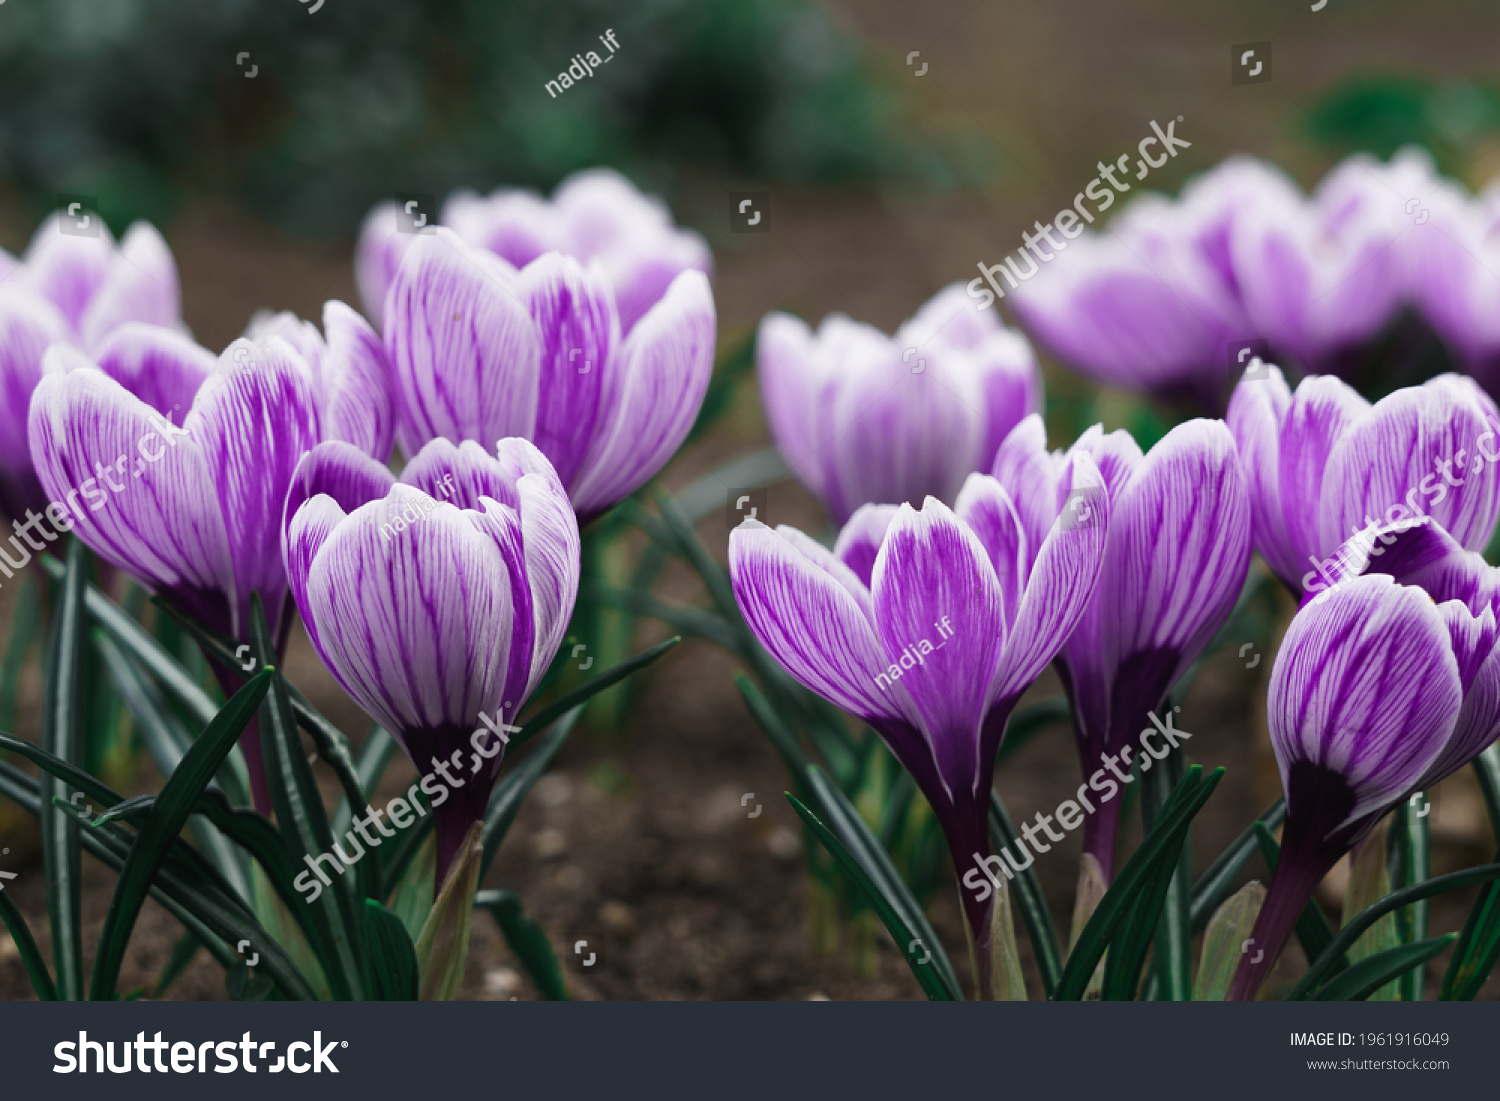 Purple Crocus Flowers in Spring. High quality photo #1961916049